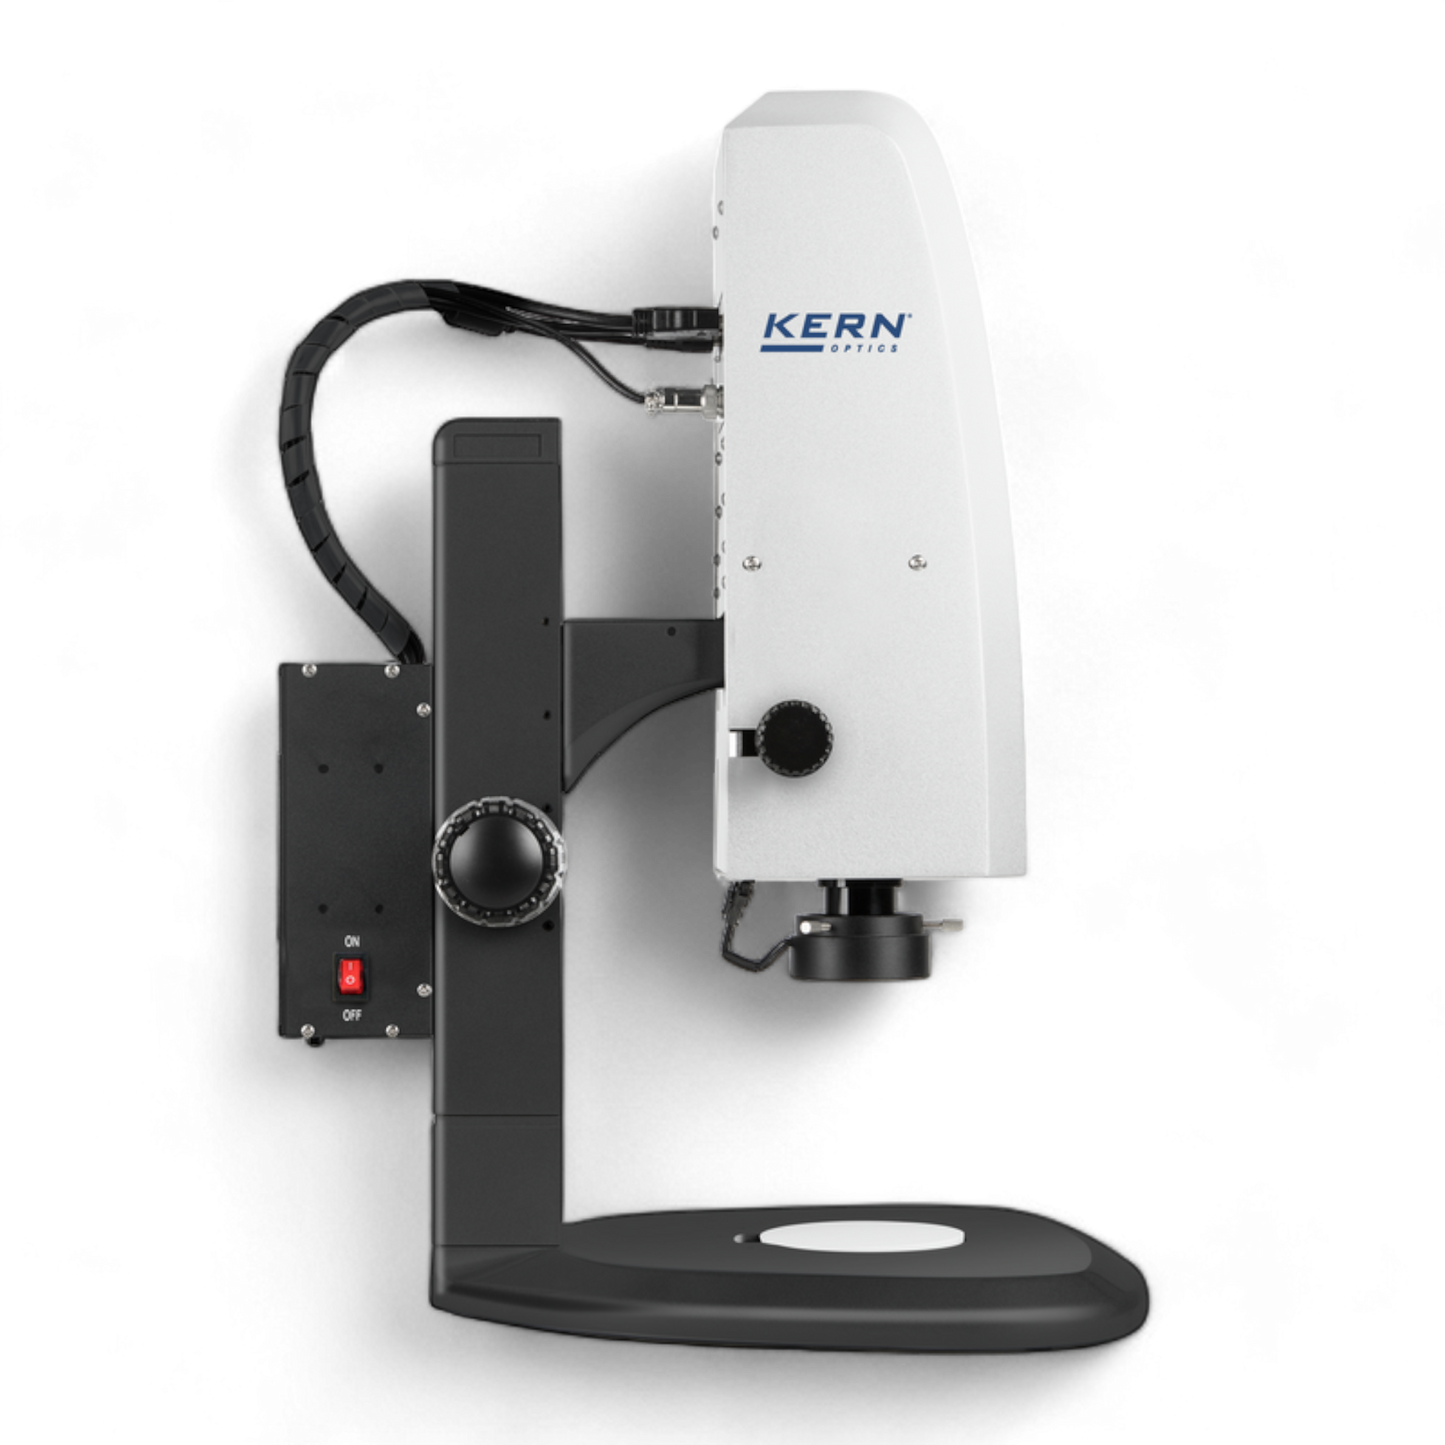 "OIV 656" Professionelt Videomikroskop med Autofokus